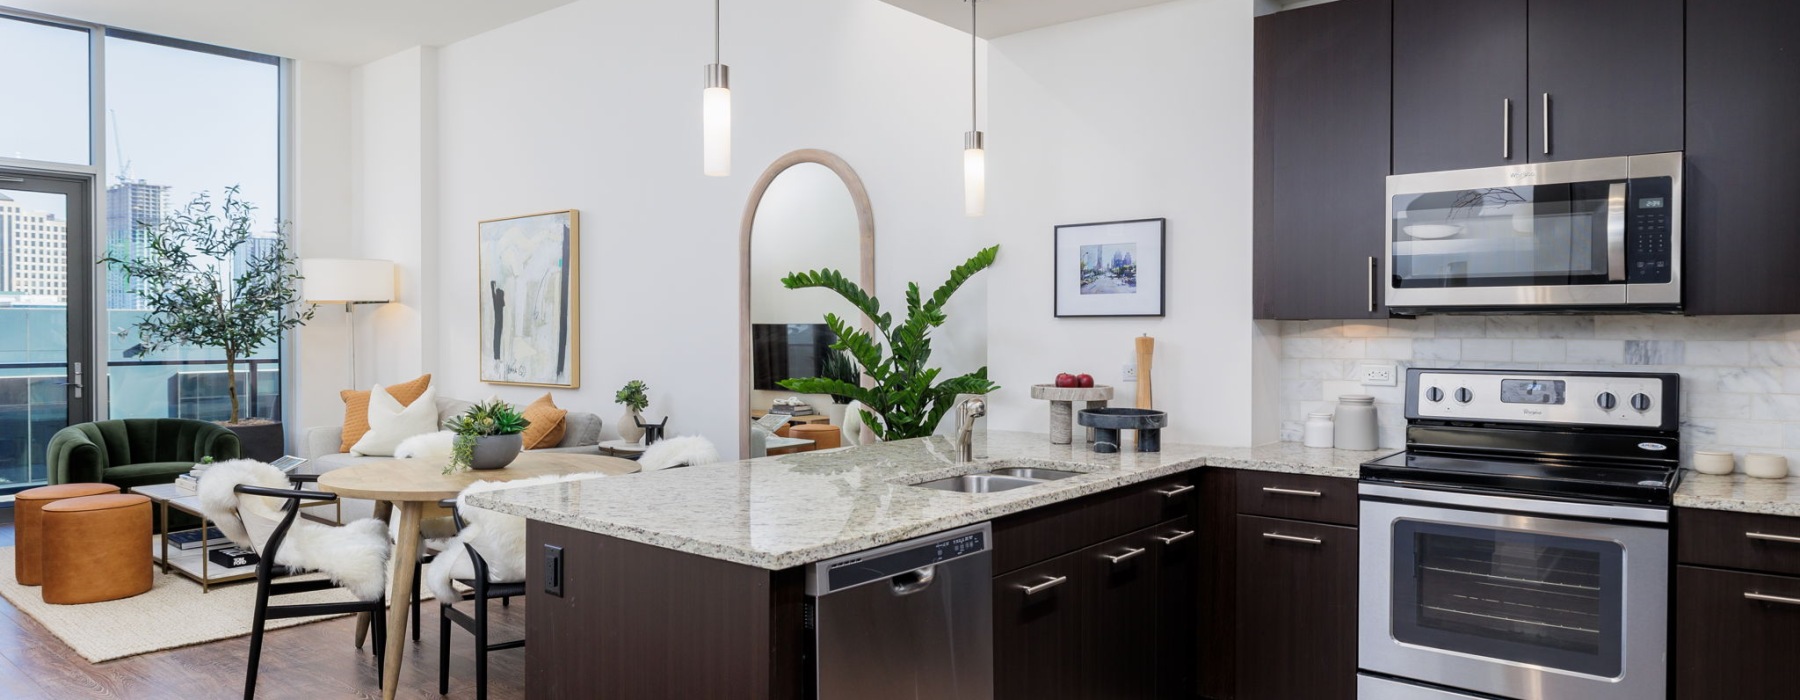 Quartz countertops and dark cabinets in apartment kitchen